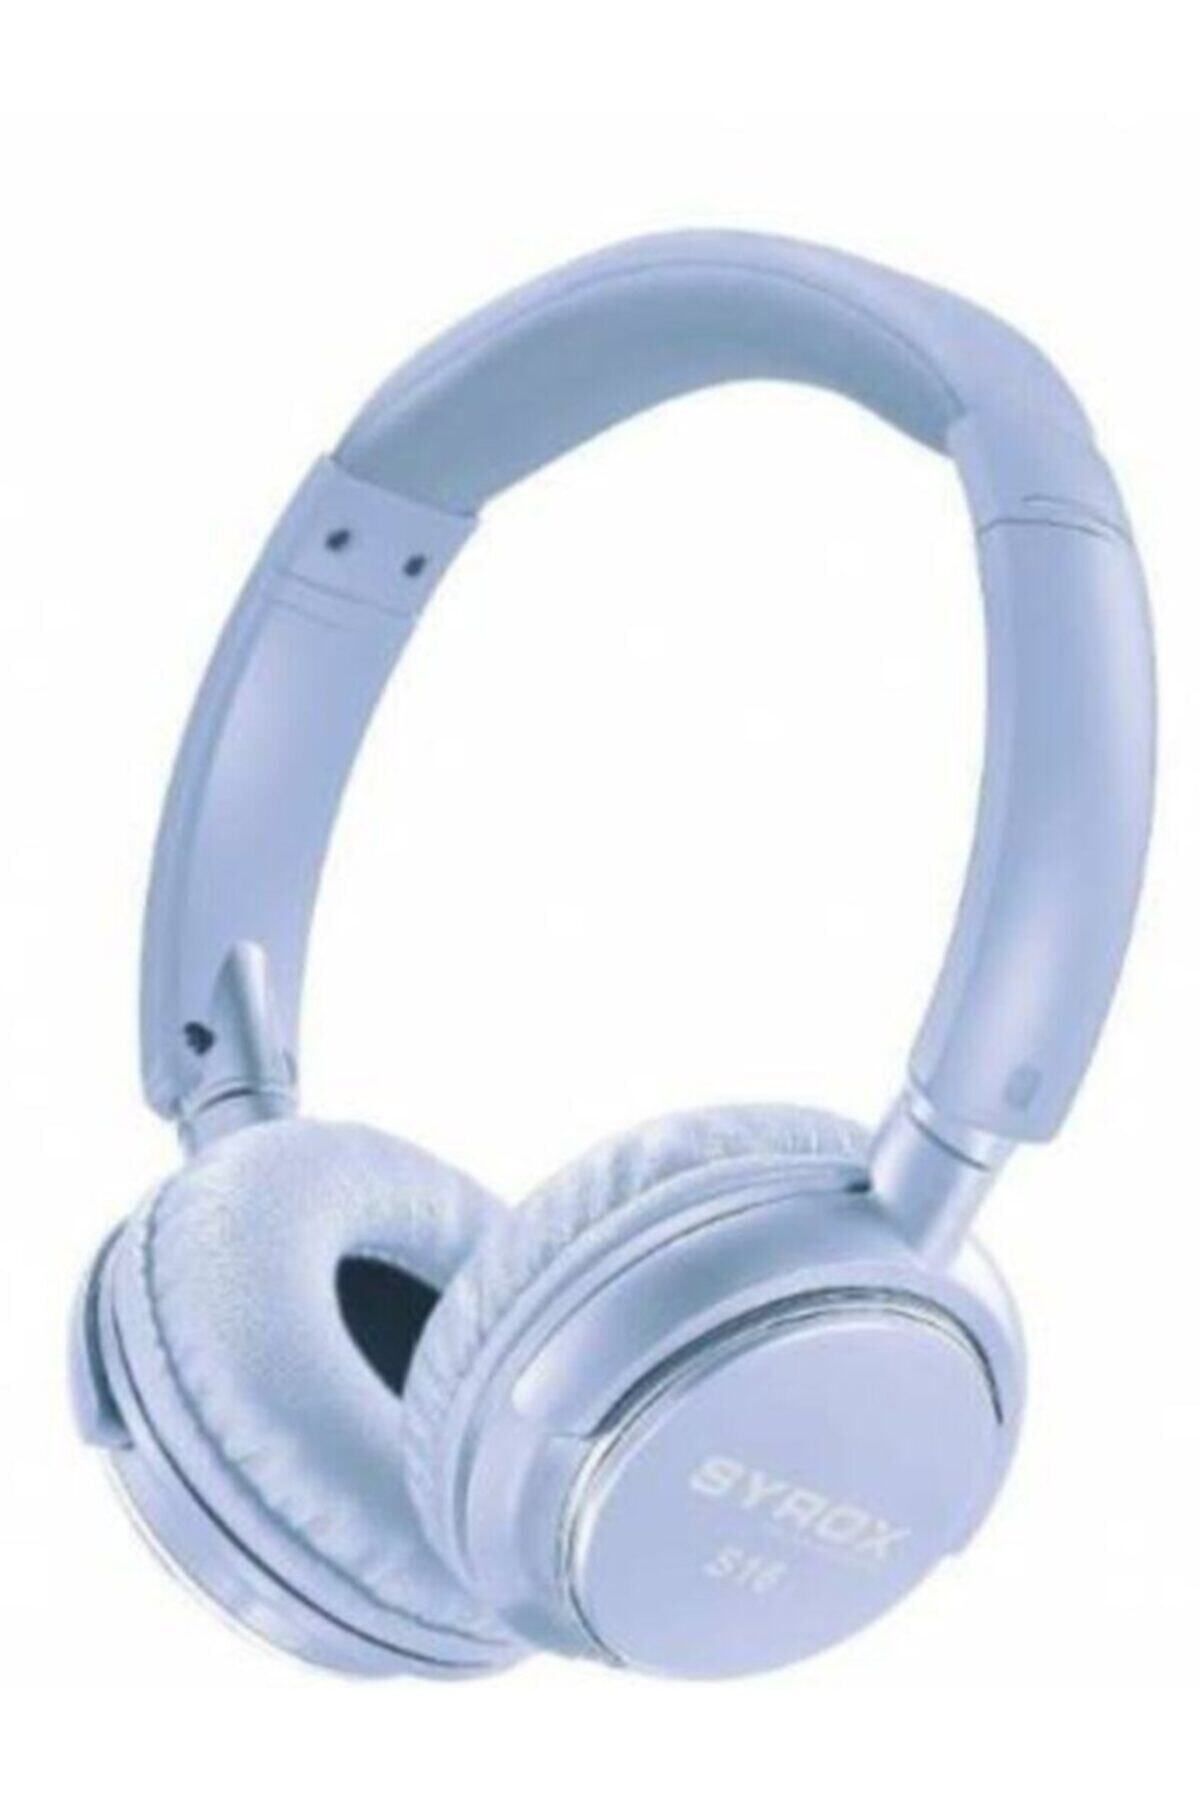 Syrox Kablosuz Bluetooth Kulaklık S16